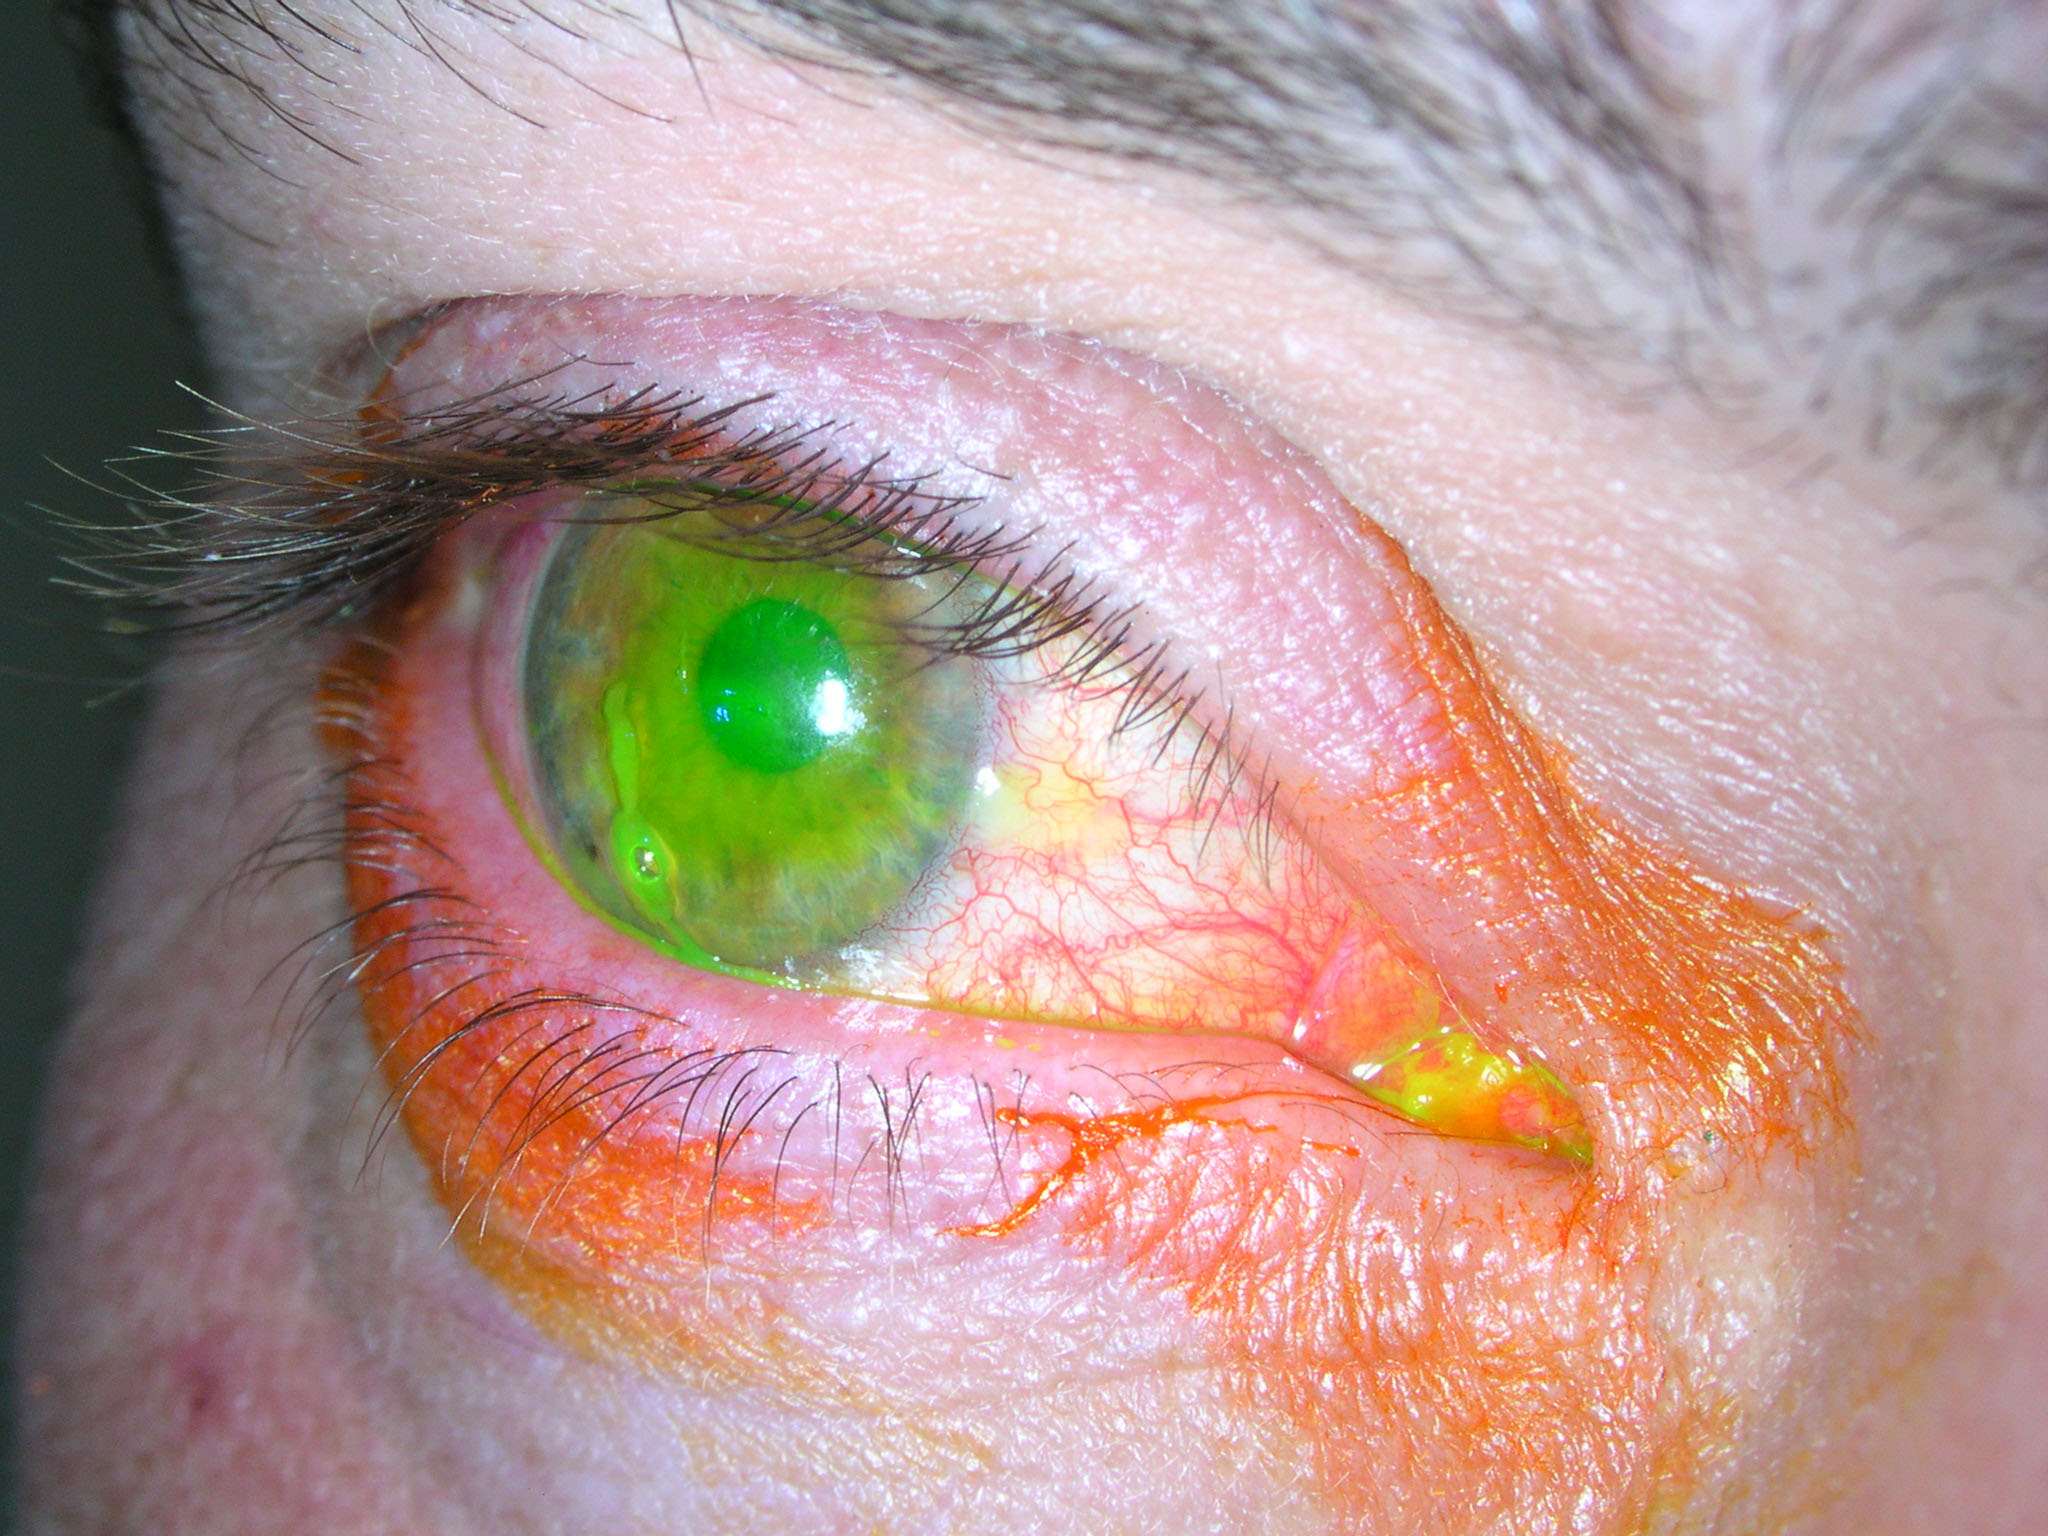 Staining to detect corneal injury